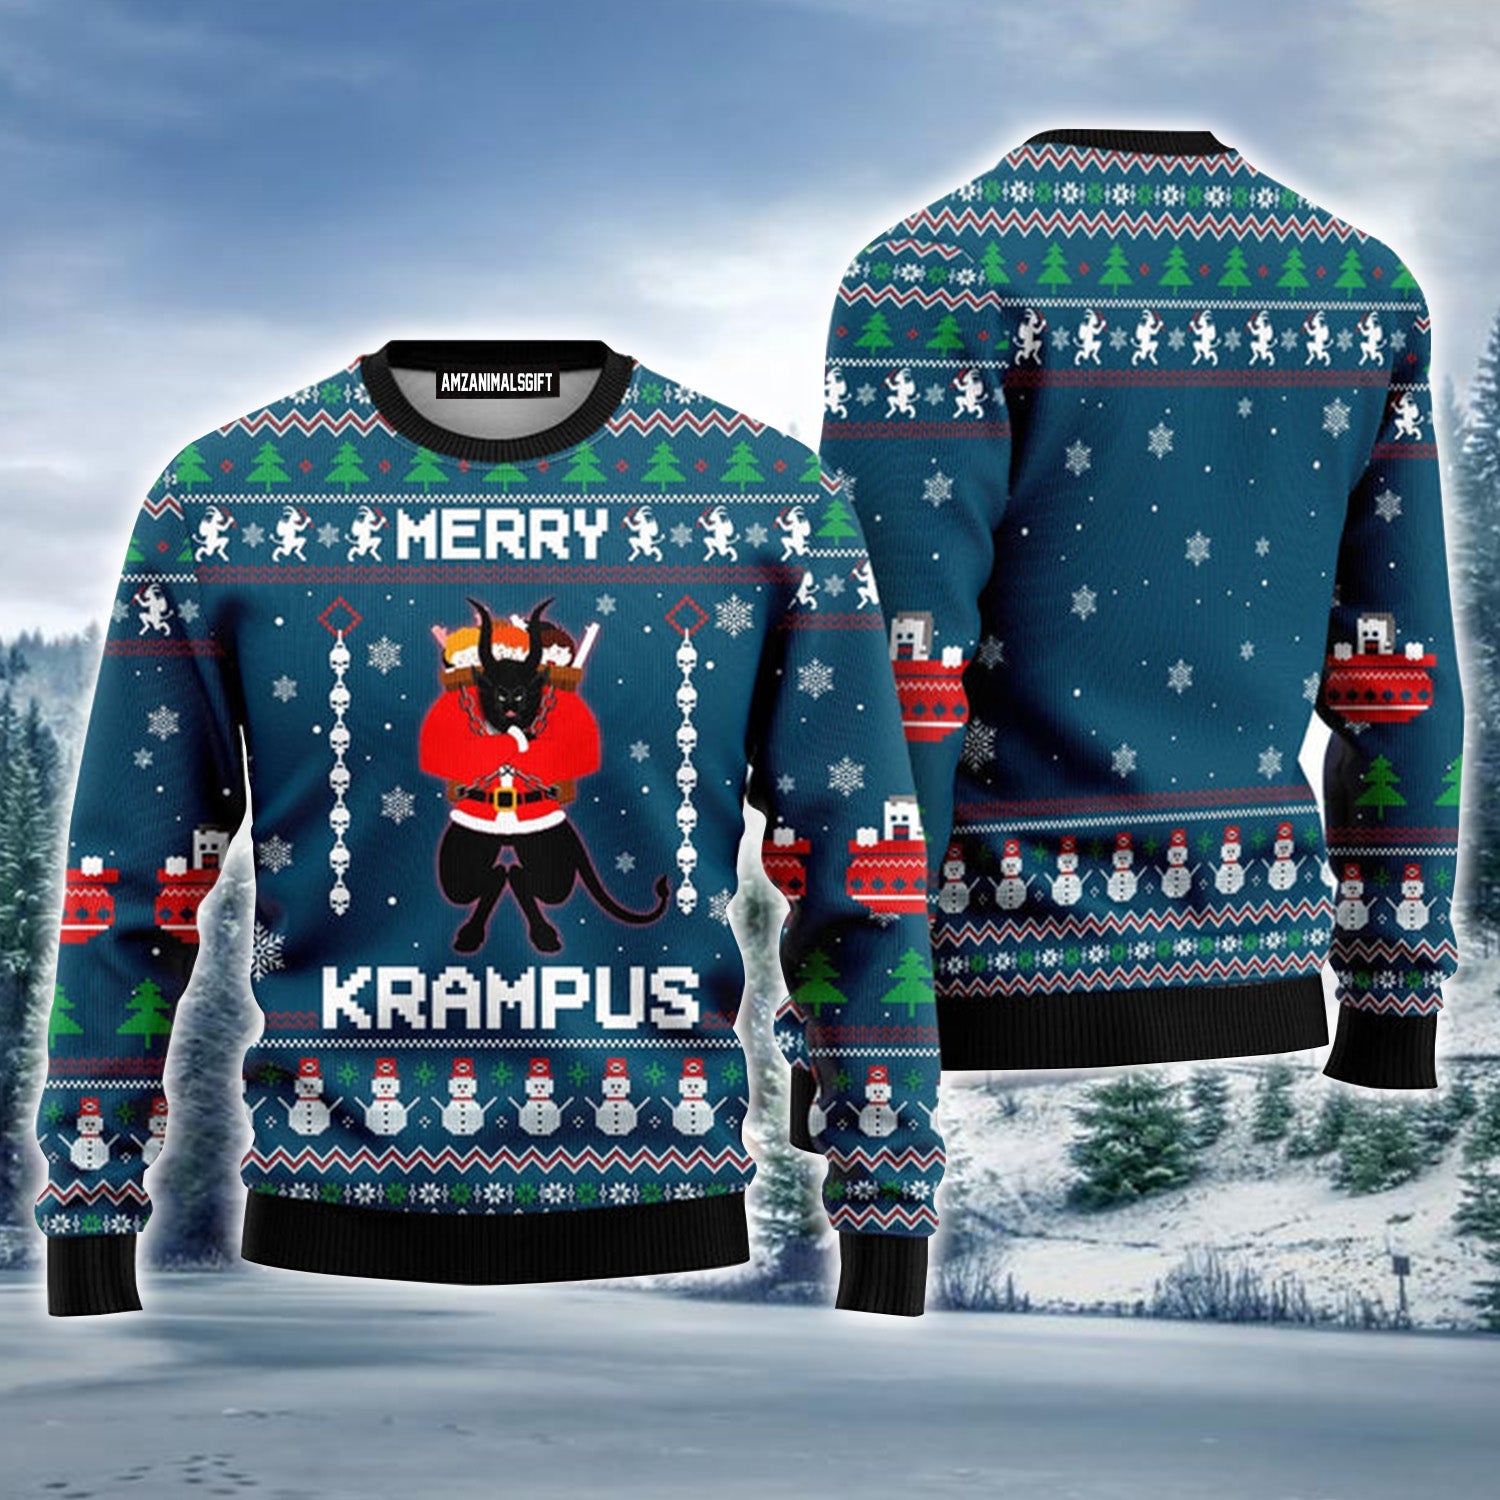 Krampus Santa Claus Urly Christmas Sweater, Christmas Sweater For Men & Women - Perfect Gift For Christmas, New Year, Winter Holiday